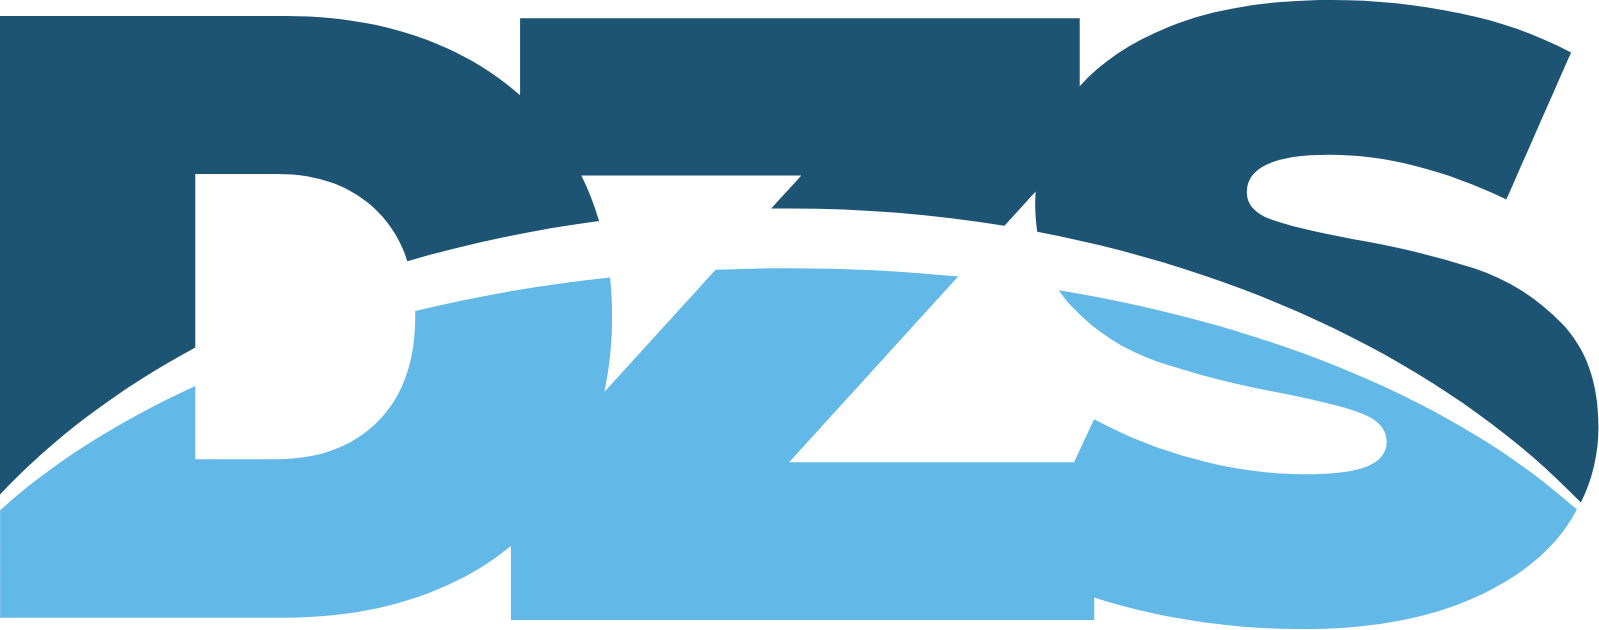 DZS Inc logo (transparent PNG)